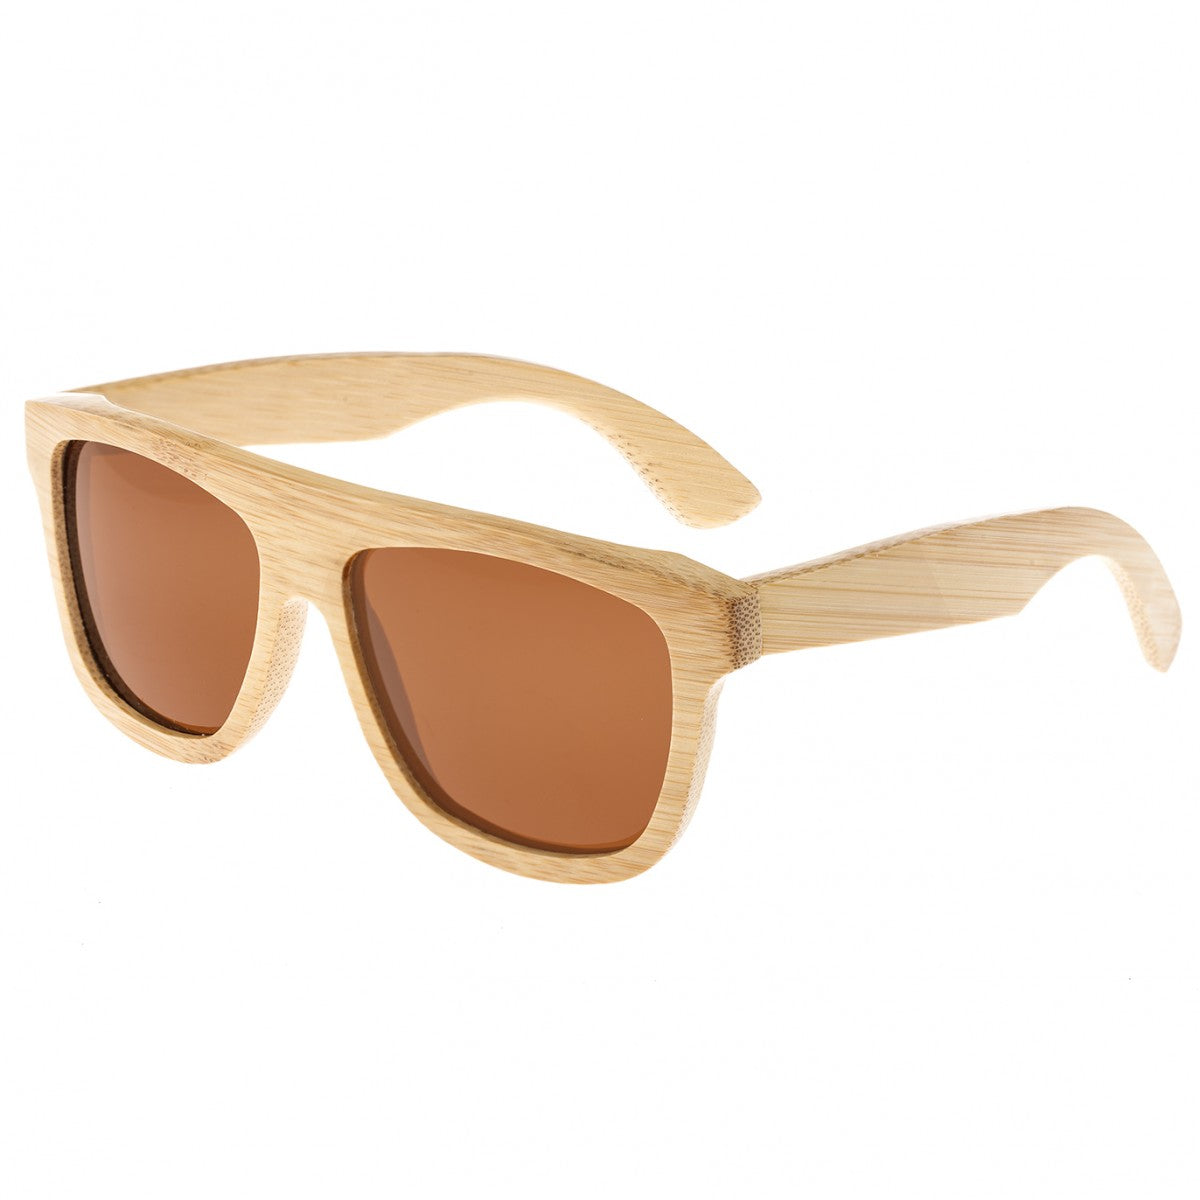 Earth Wood Imperial Unisex Sunglasses Khaki/Tan Frame Brown Lens ESG031B